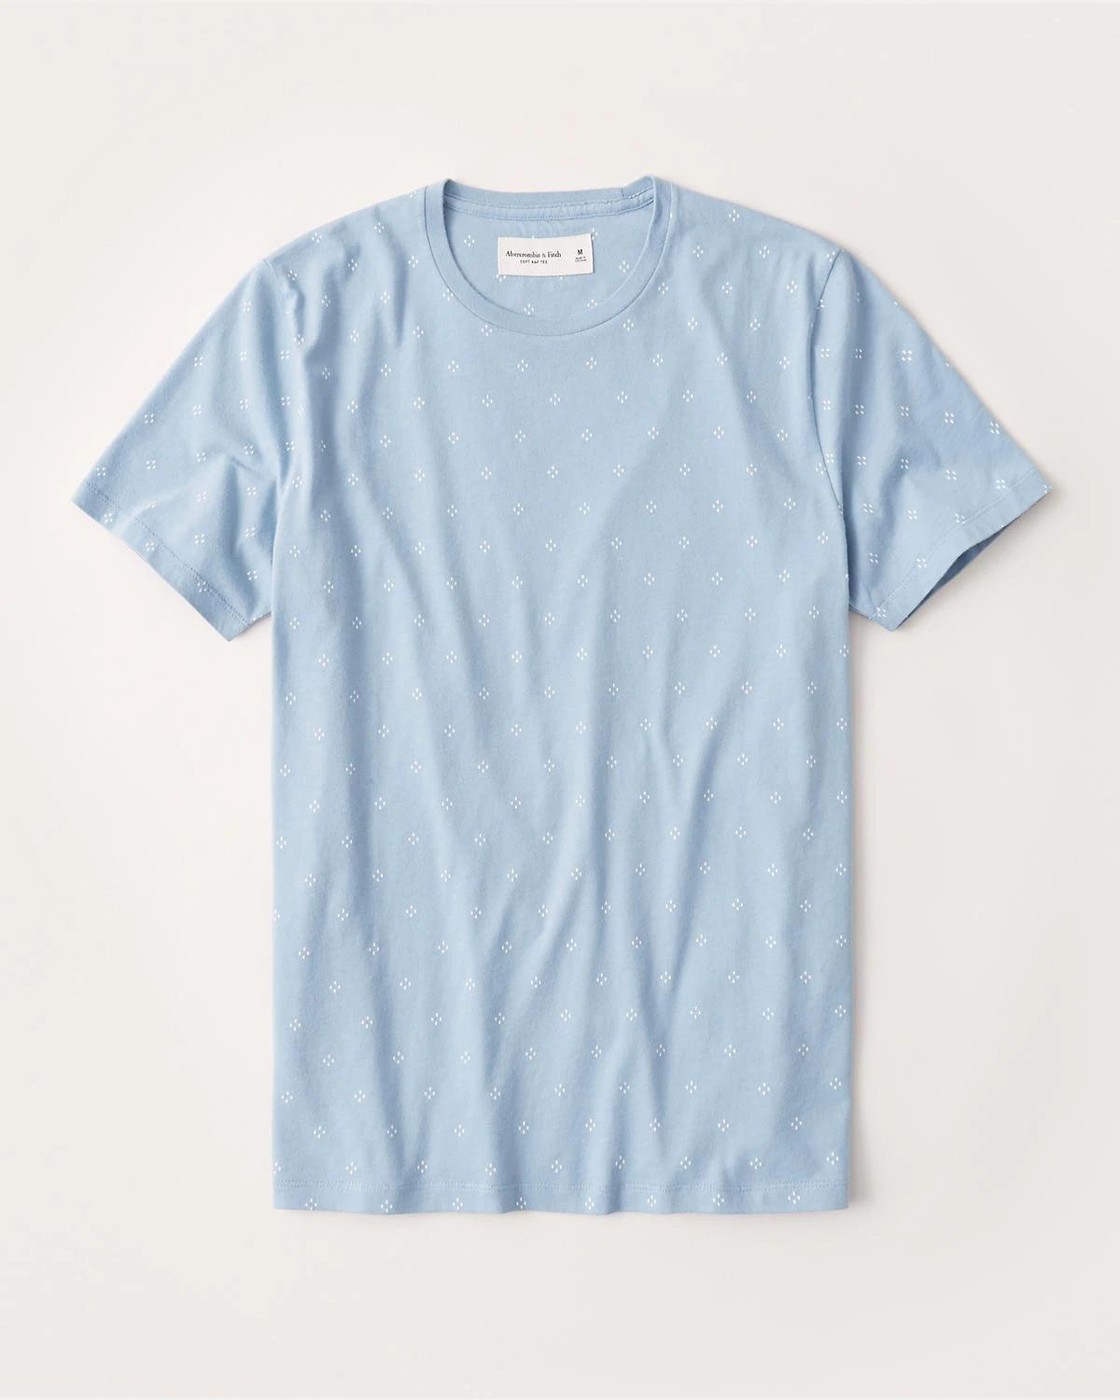 Голубая футболка - мужская футболка Abercrombie & Fitch, S, S